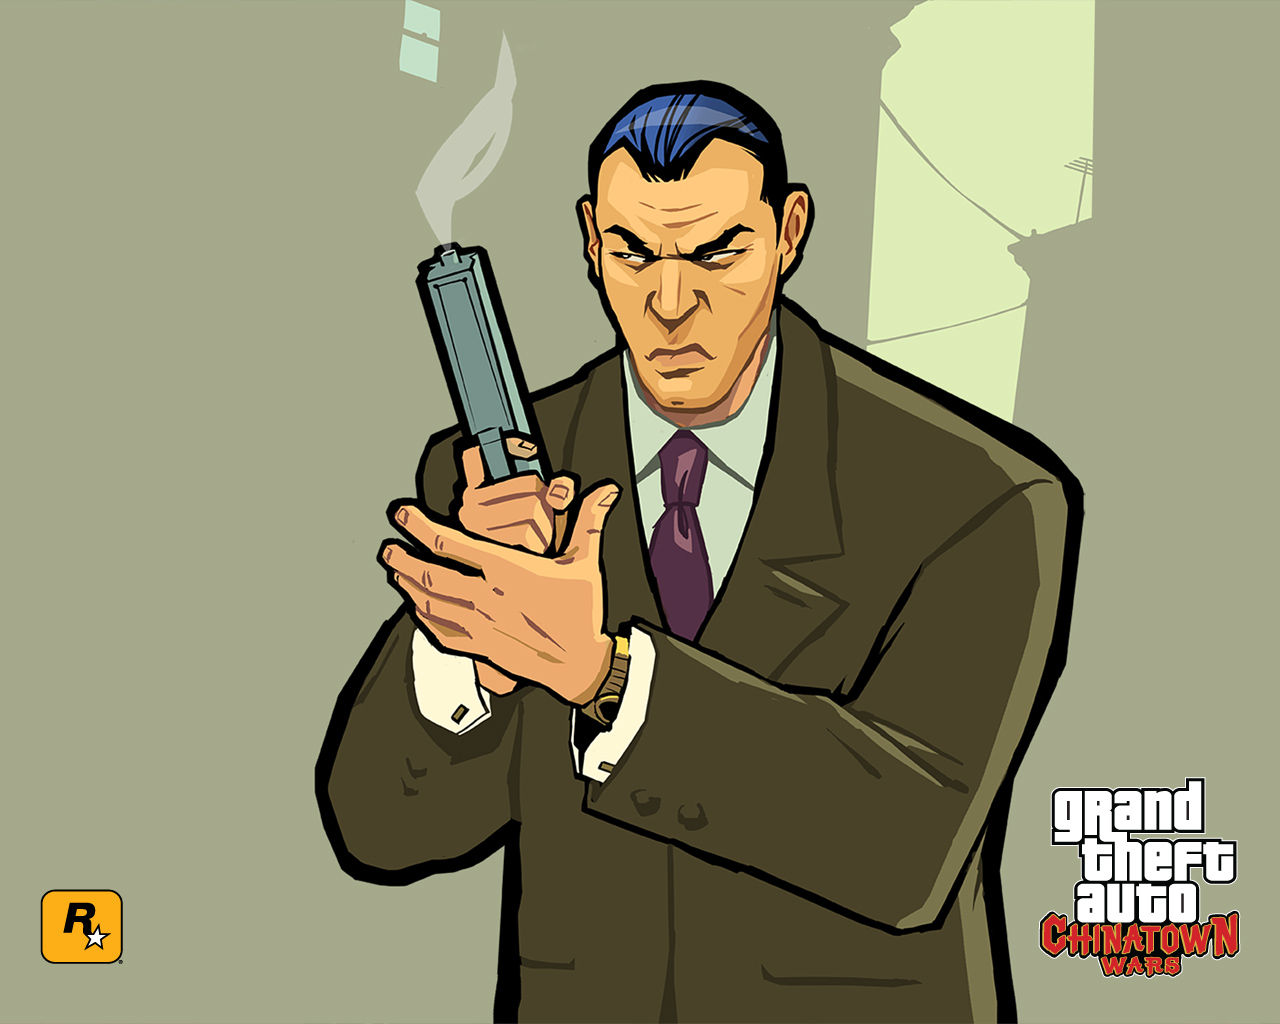 Завантажити шпалери Grand Theft Auto: Chinatown Wars на телефон безкоштовно